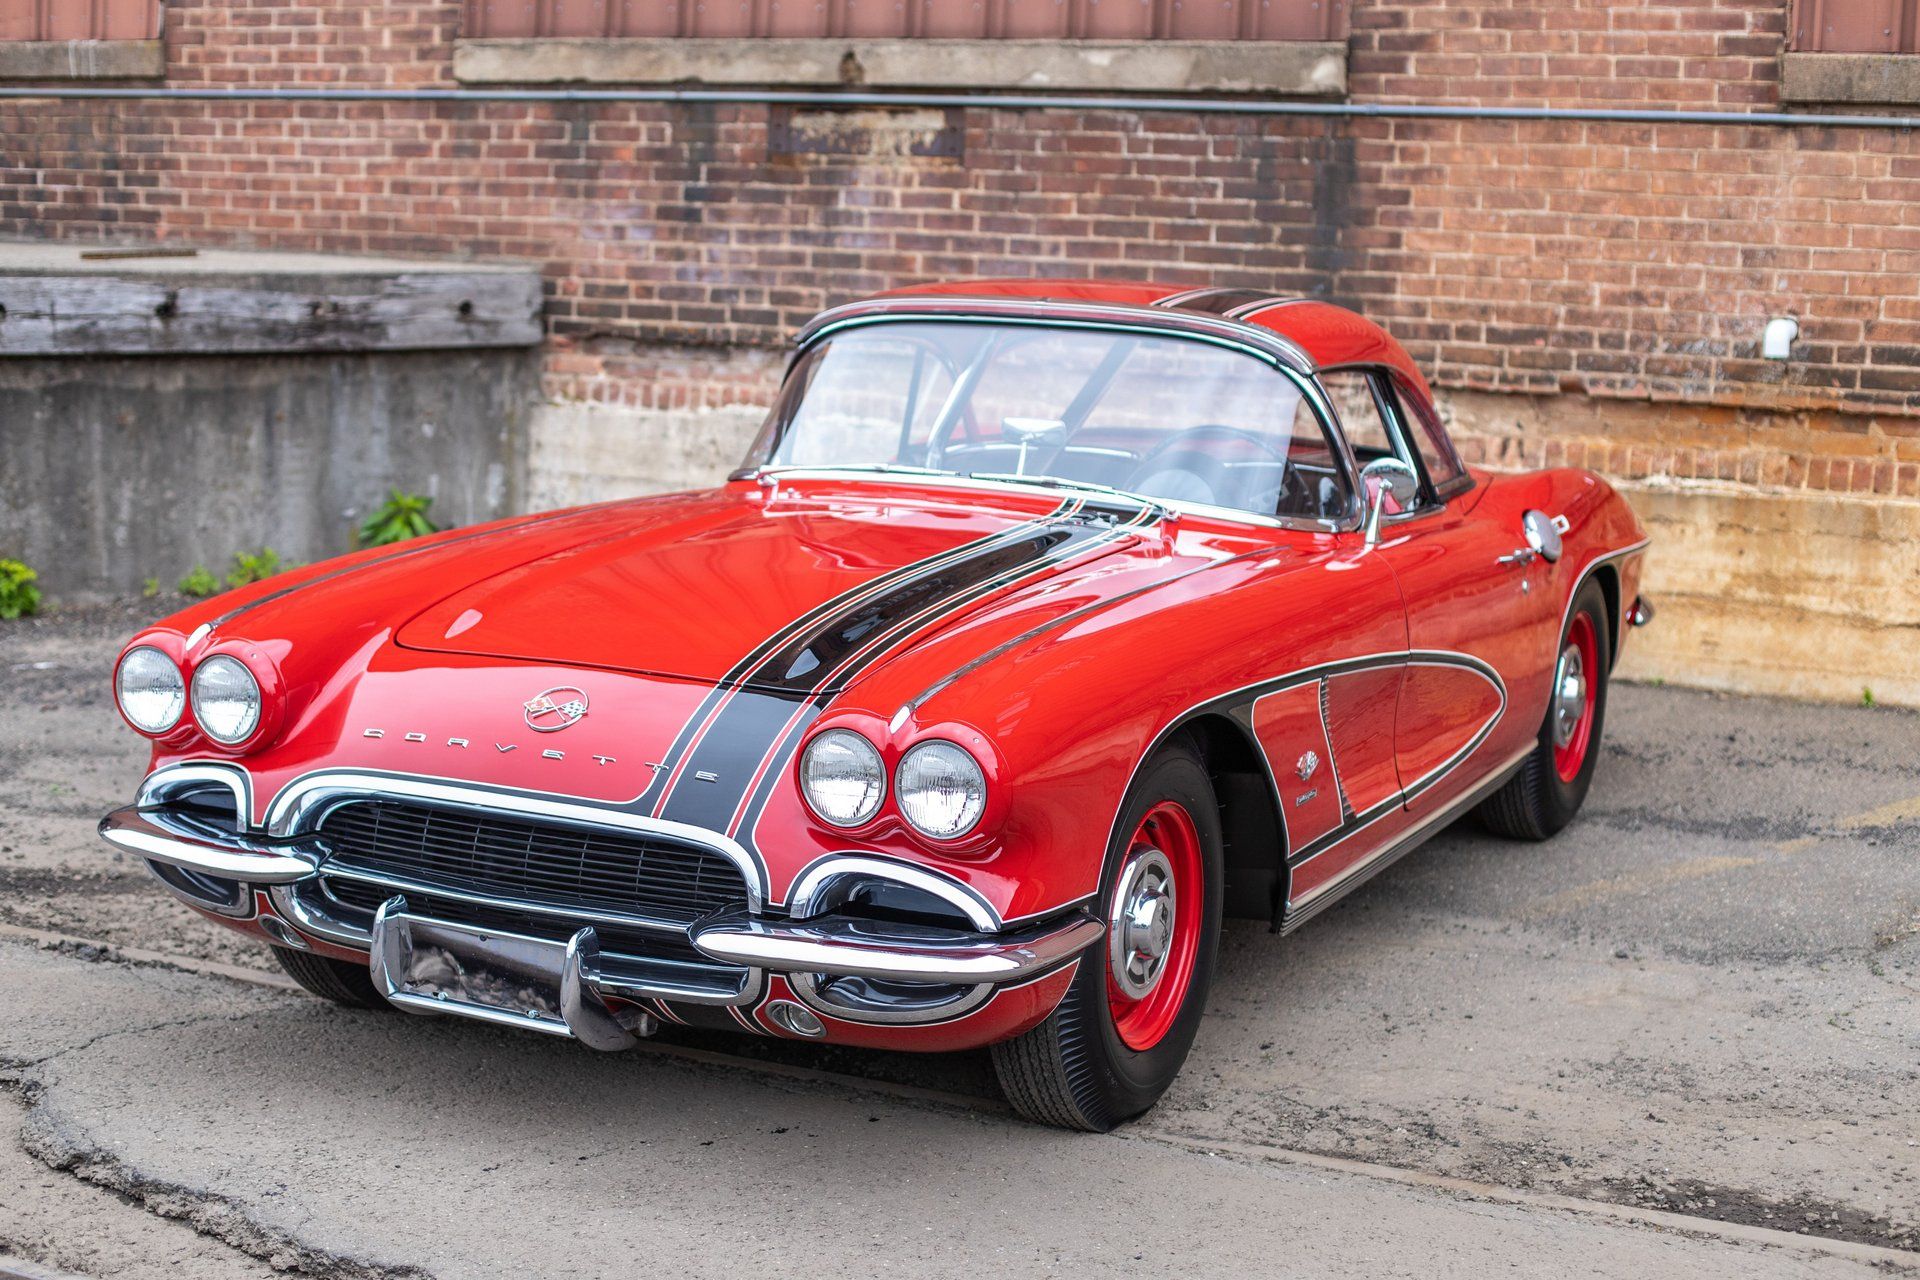 <img src="1962-chevrolet-corvette.jpeg" alt="A 1962 Chevrolet Corvette Big Brake Fuelie">